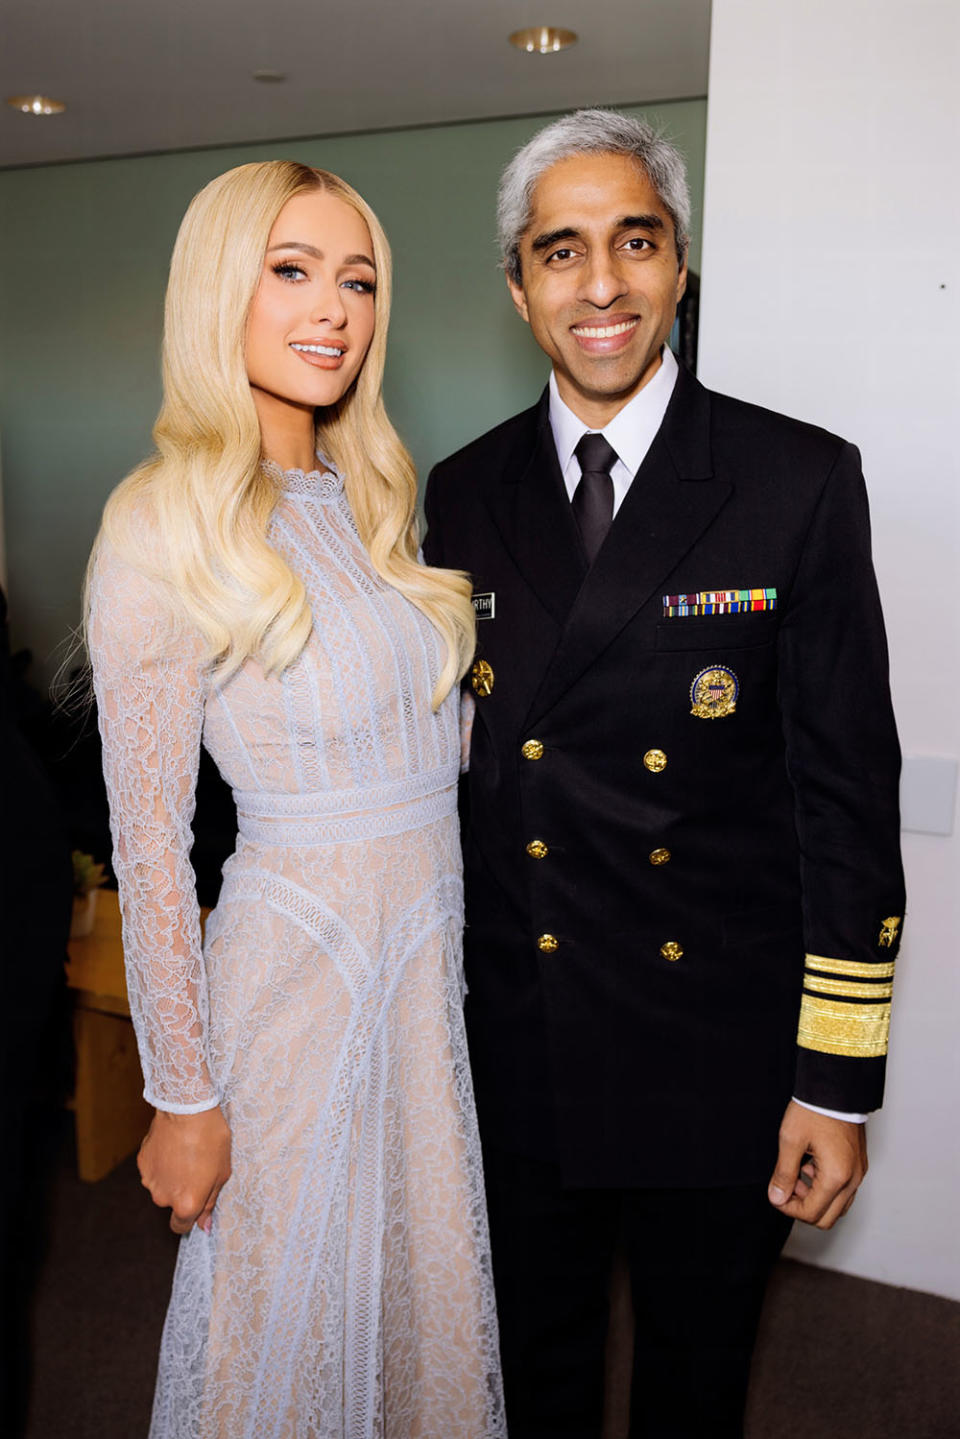 Paris Hilton and U.S. Surgeon General Dr. Vivek Murthy